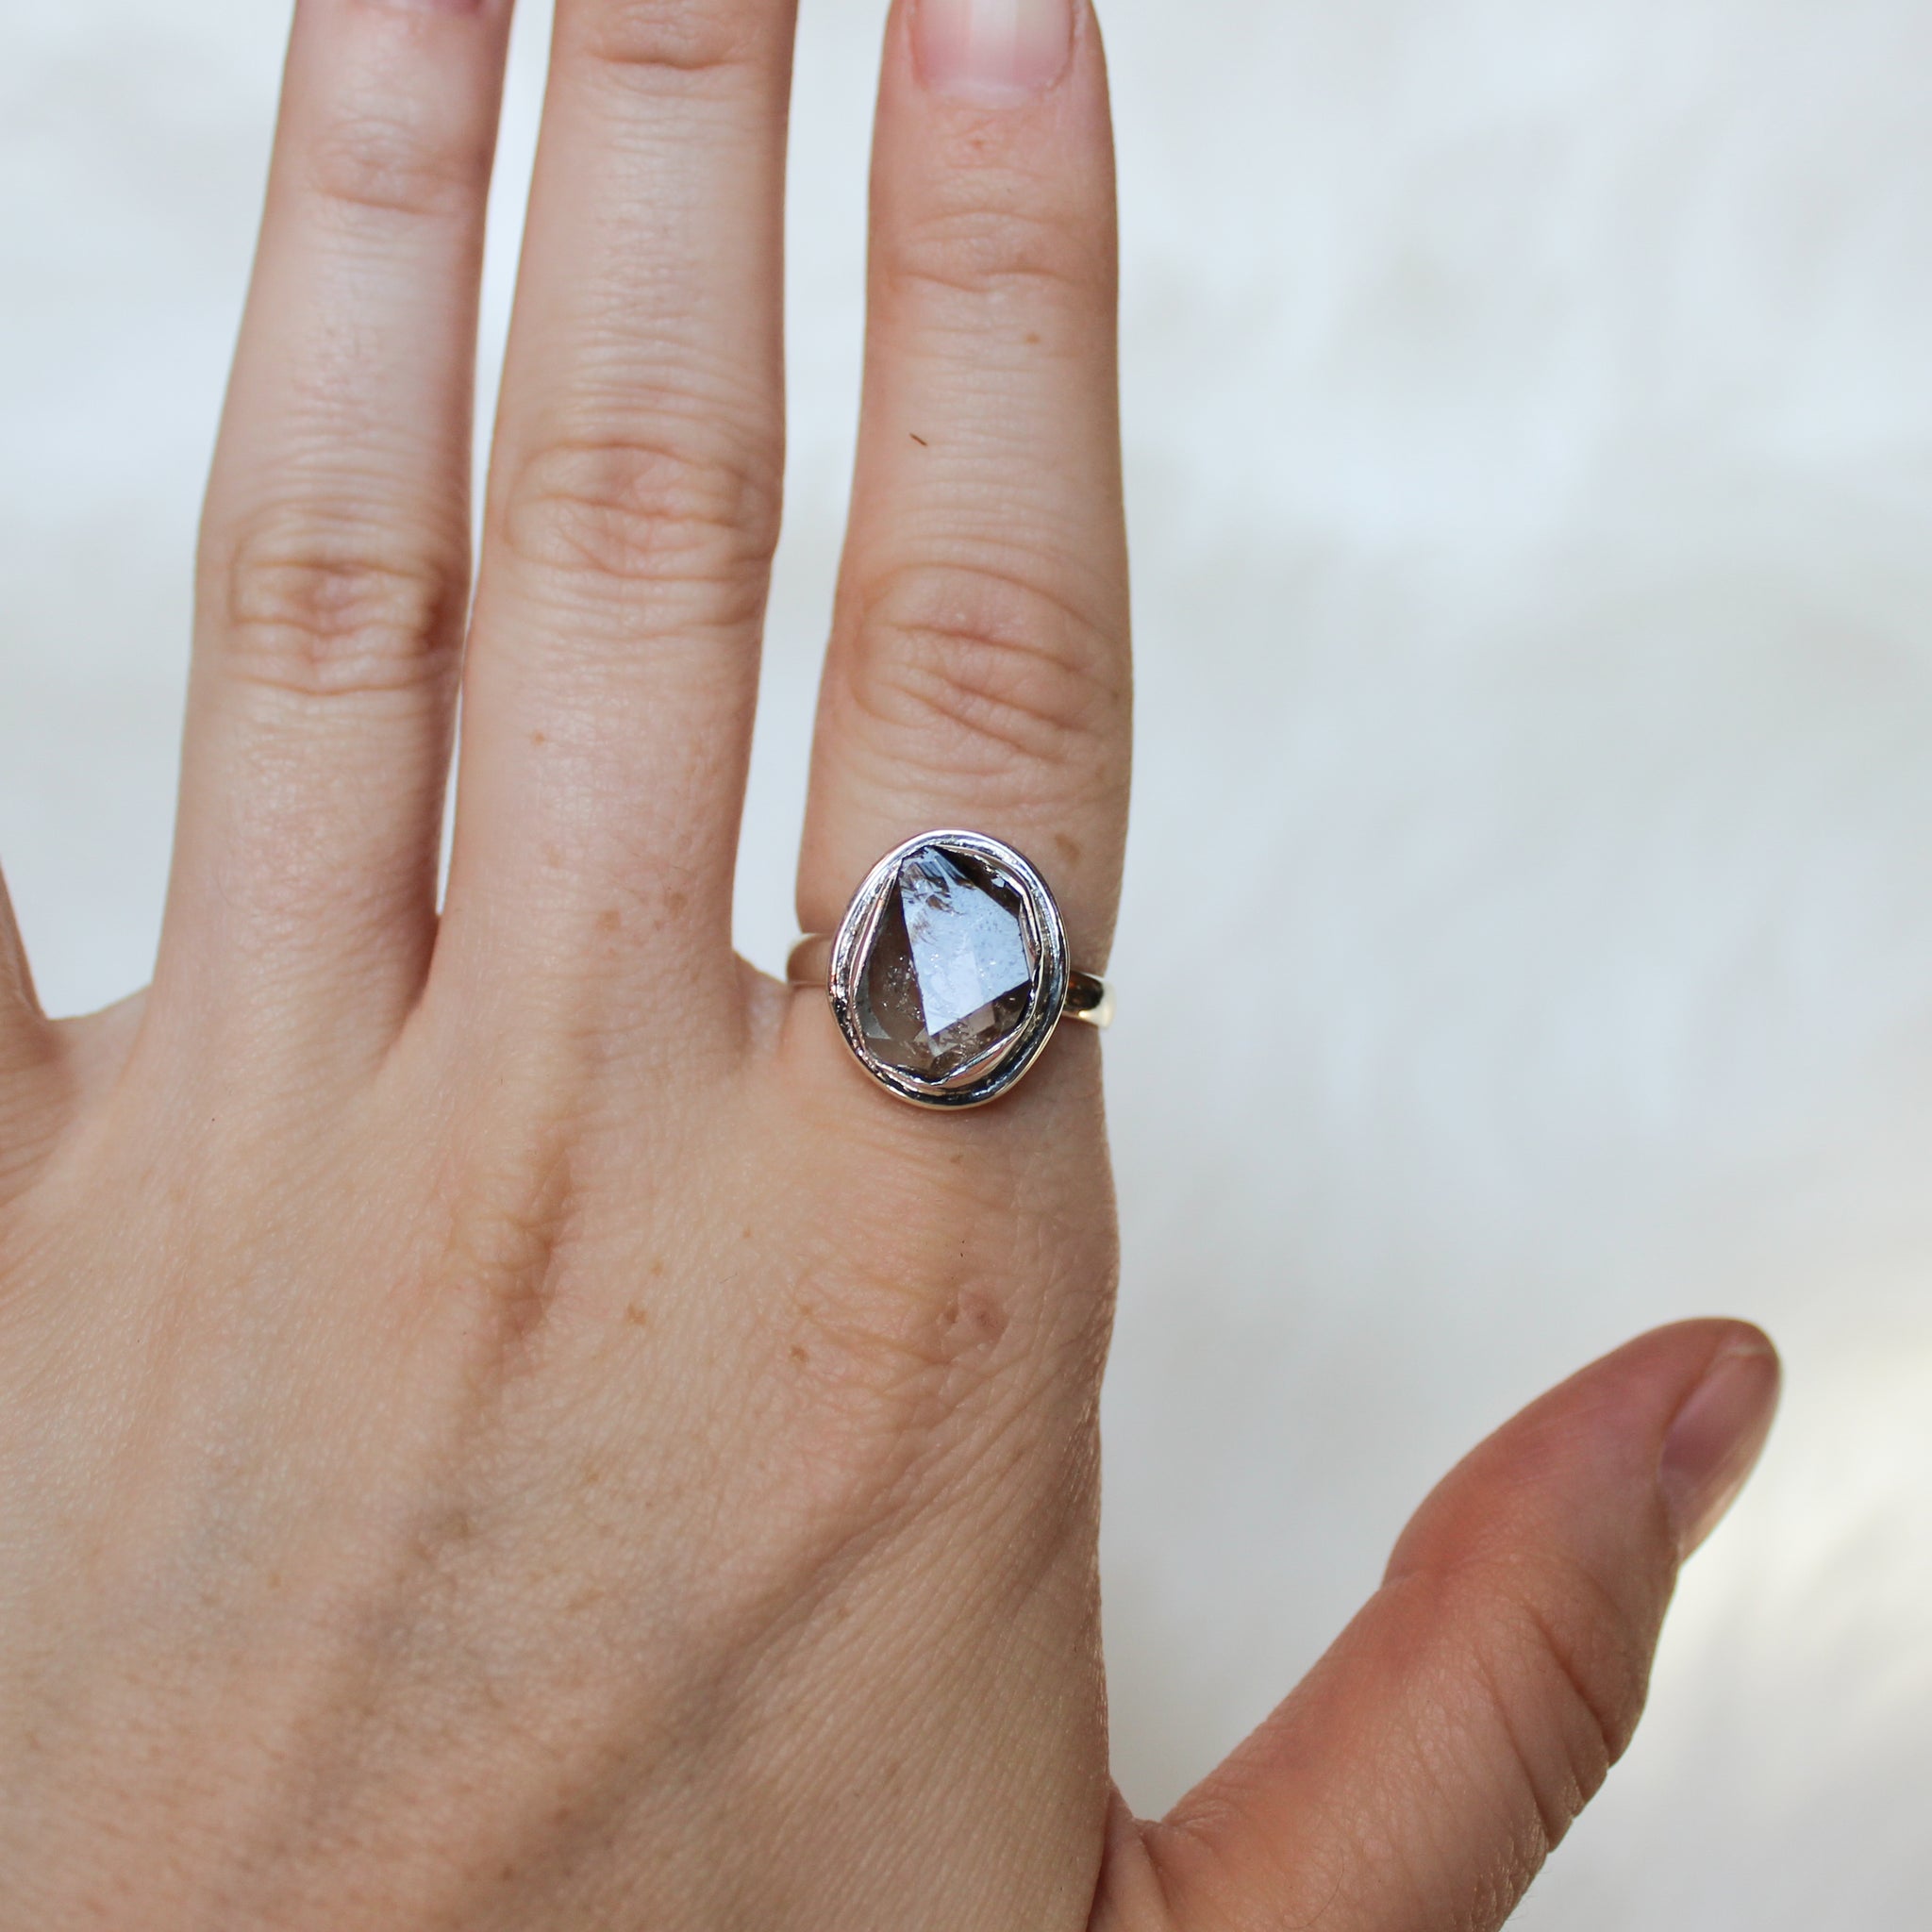 Herkimer Diamond Ring size 7.75